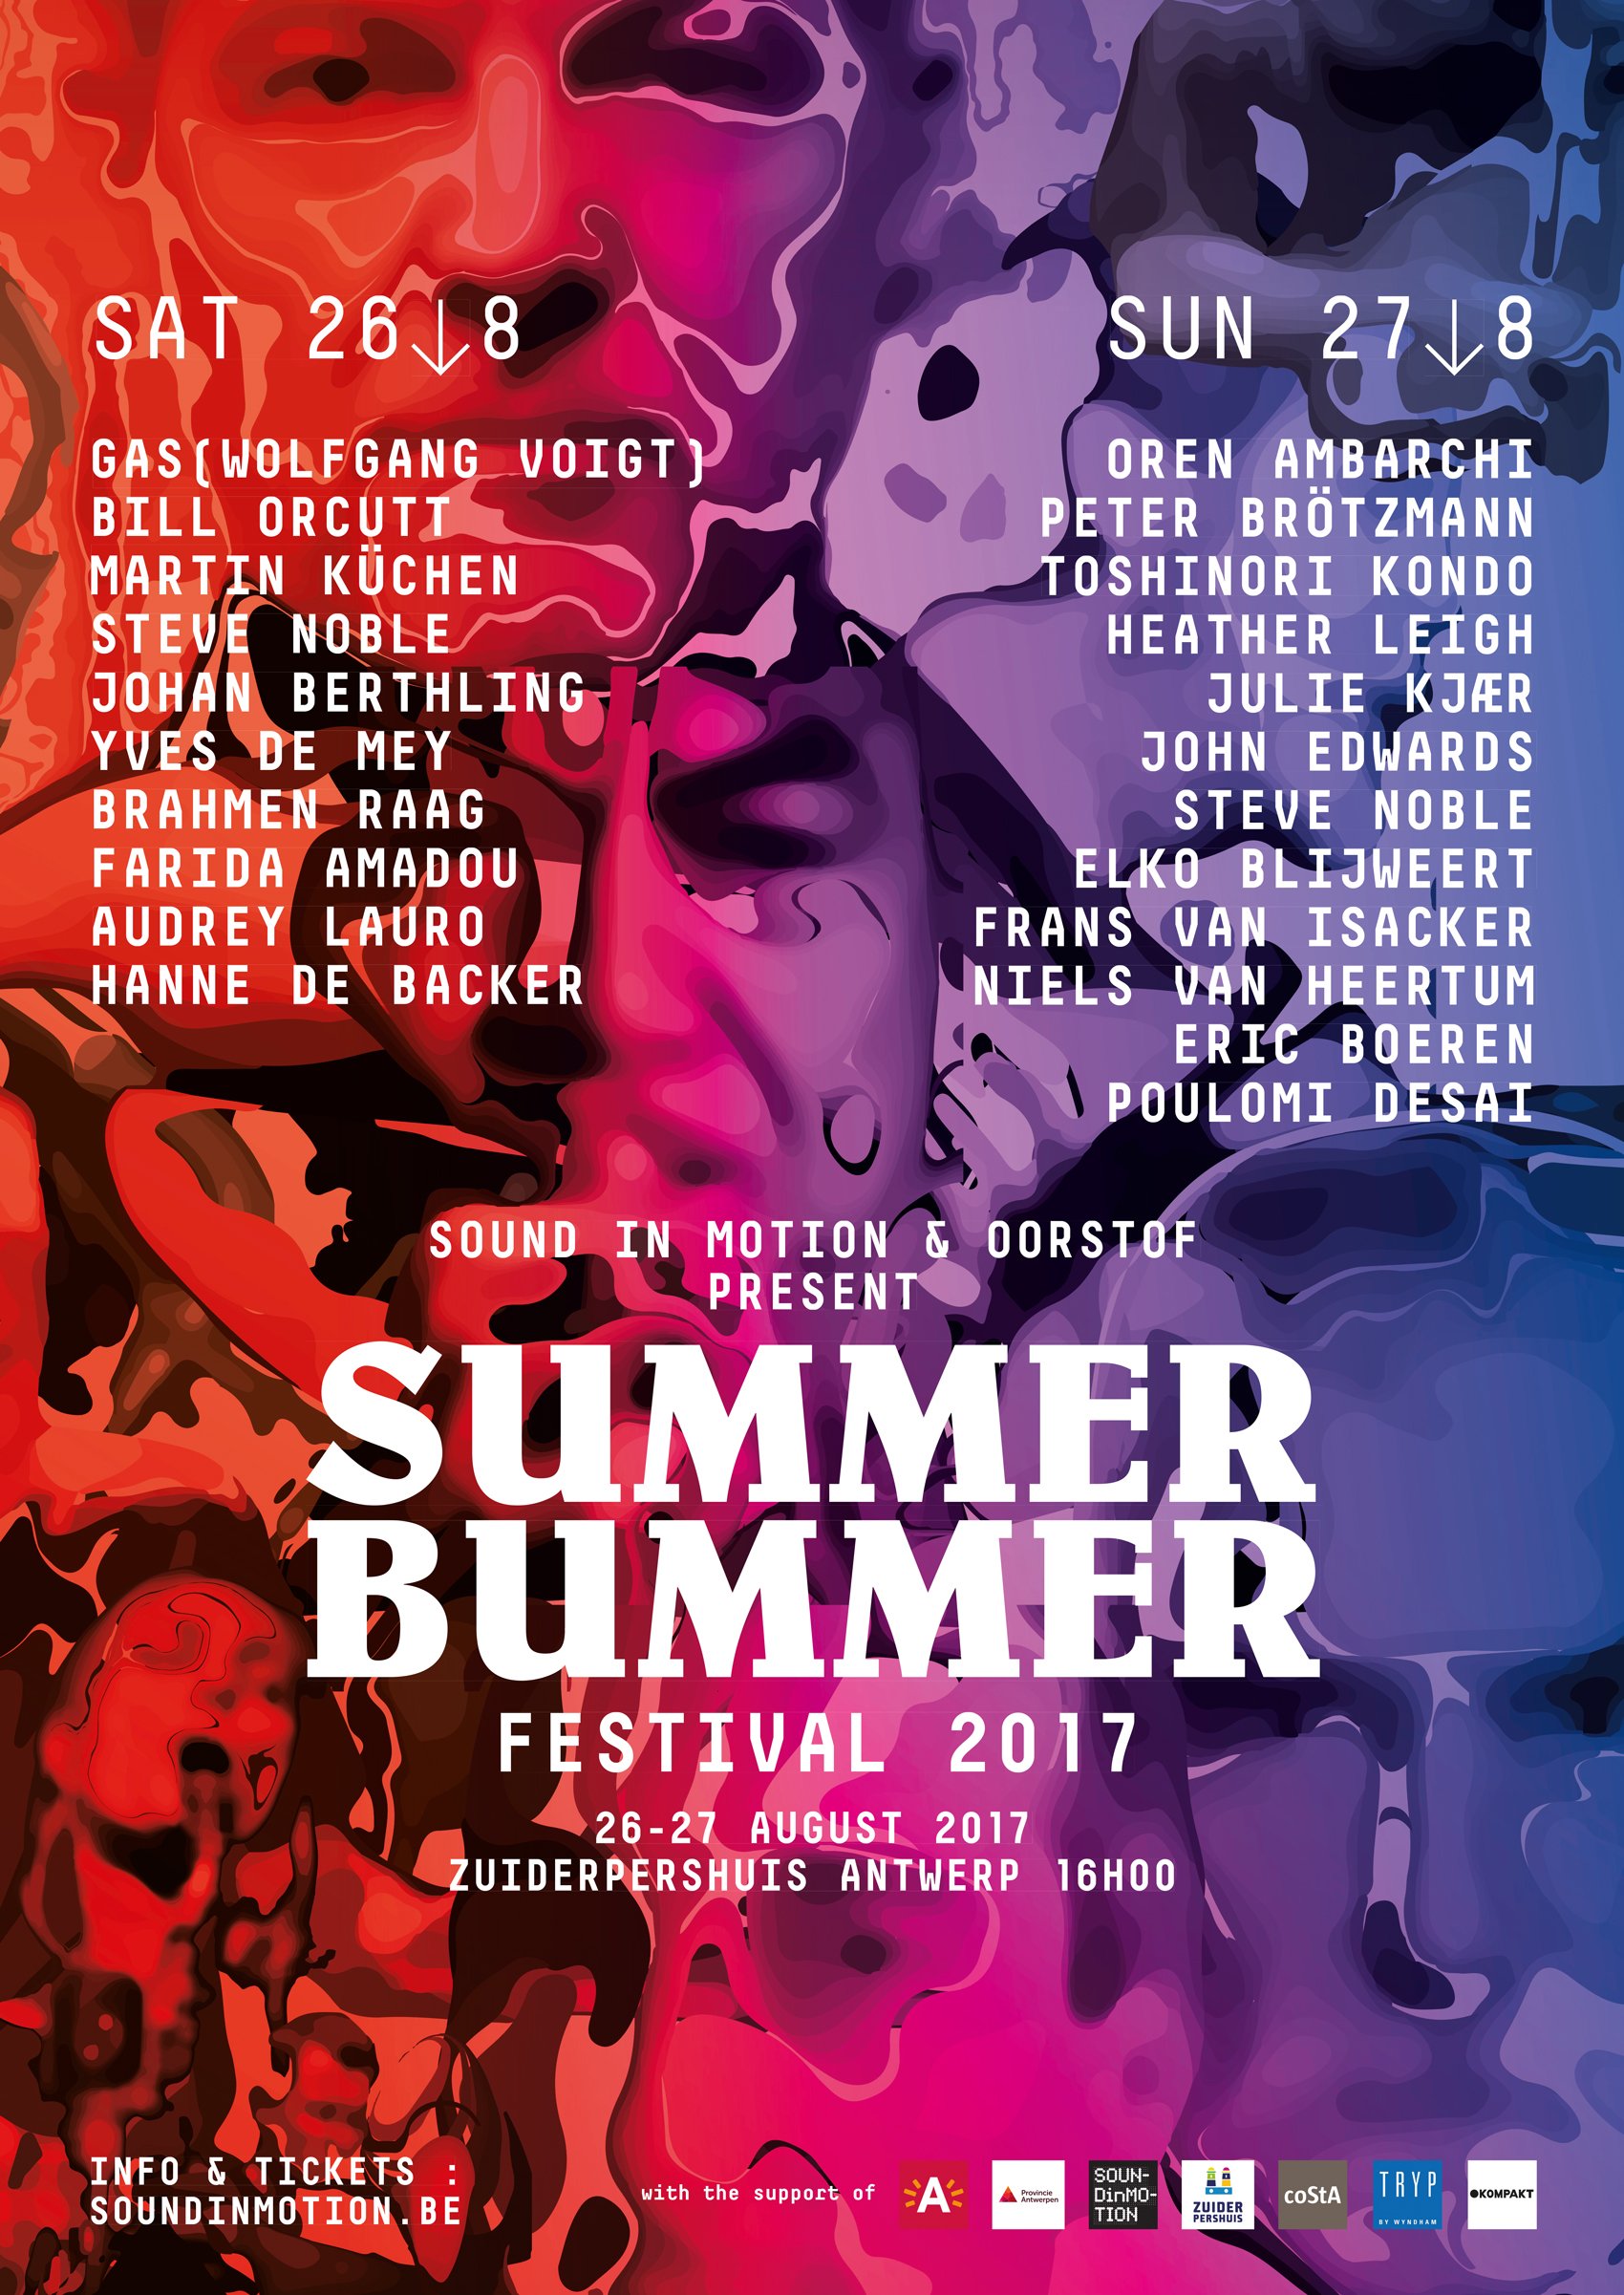 Summer Bummer Festival 2017 at Zuiderpershuis (Antwerp) on 26 Aug 2017